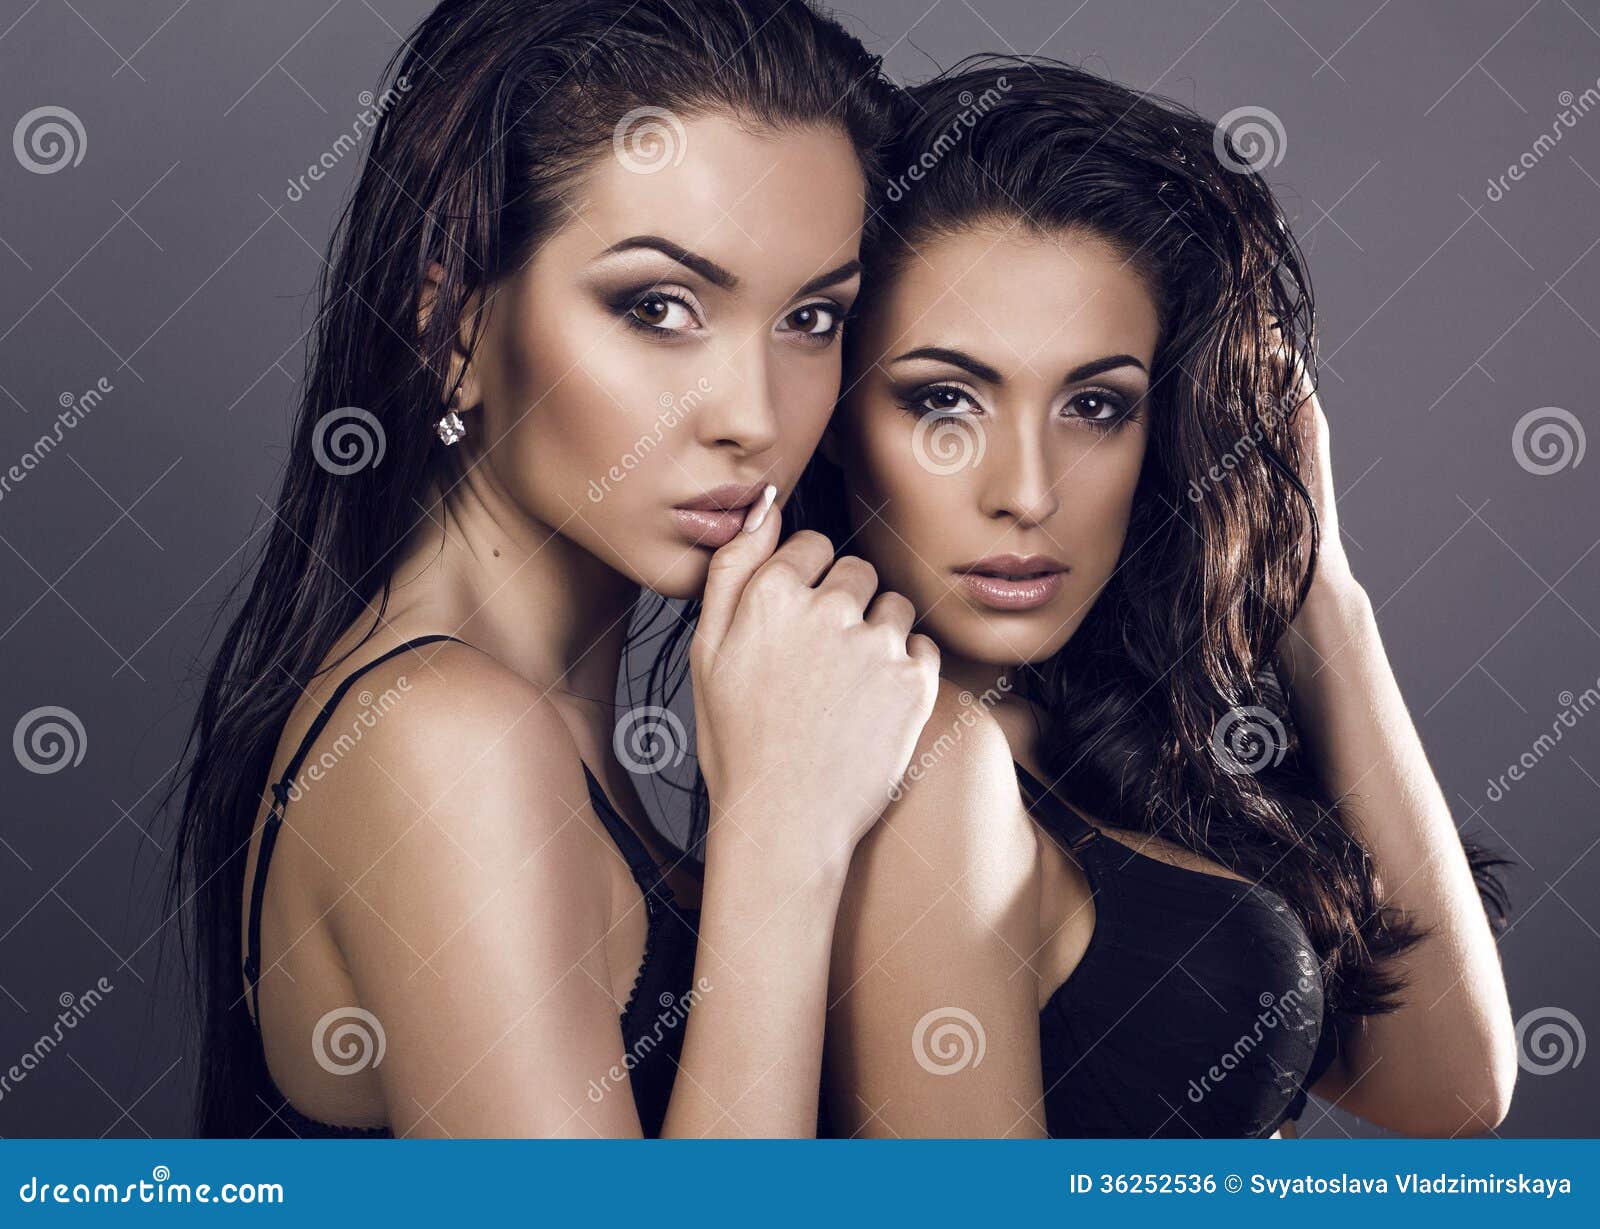 Two girls stock photo. Image of girl, sensuality - 36252536